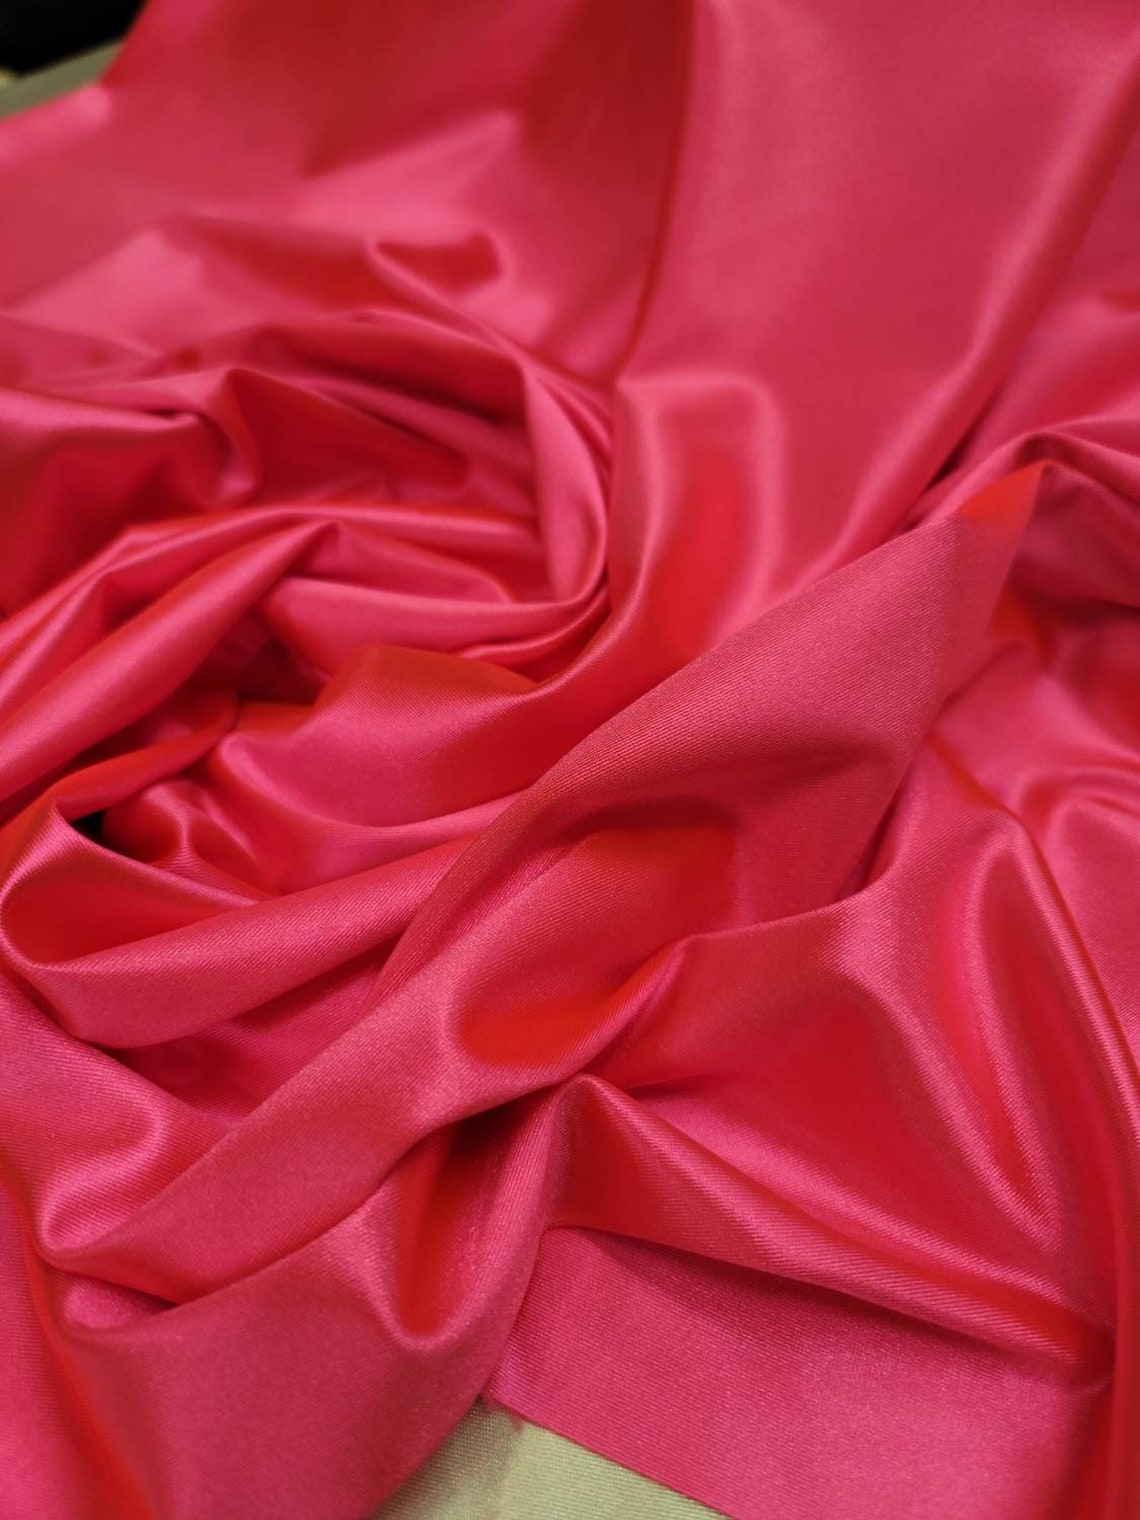 Hot Pink Stretch Nylon Spandex Fabric by the Yard Dress - Etsy